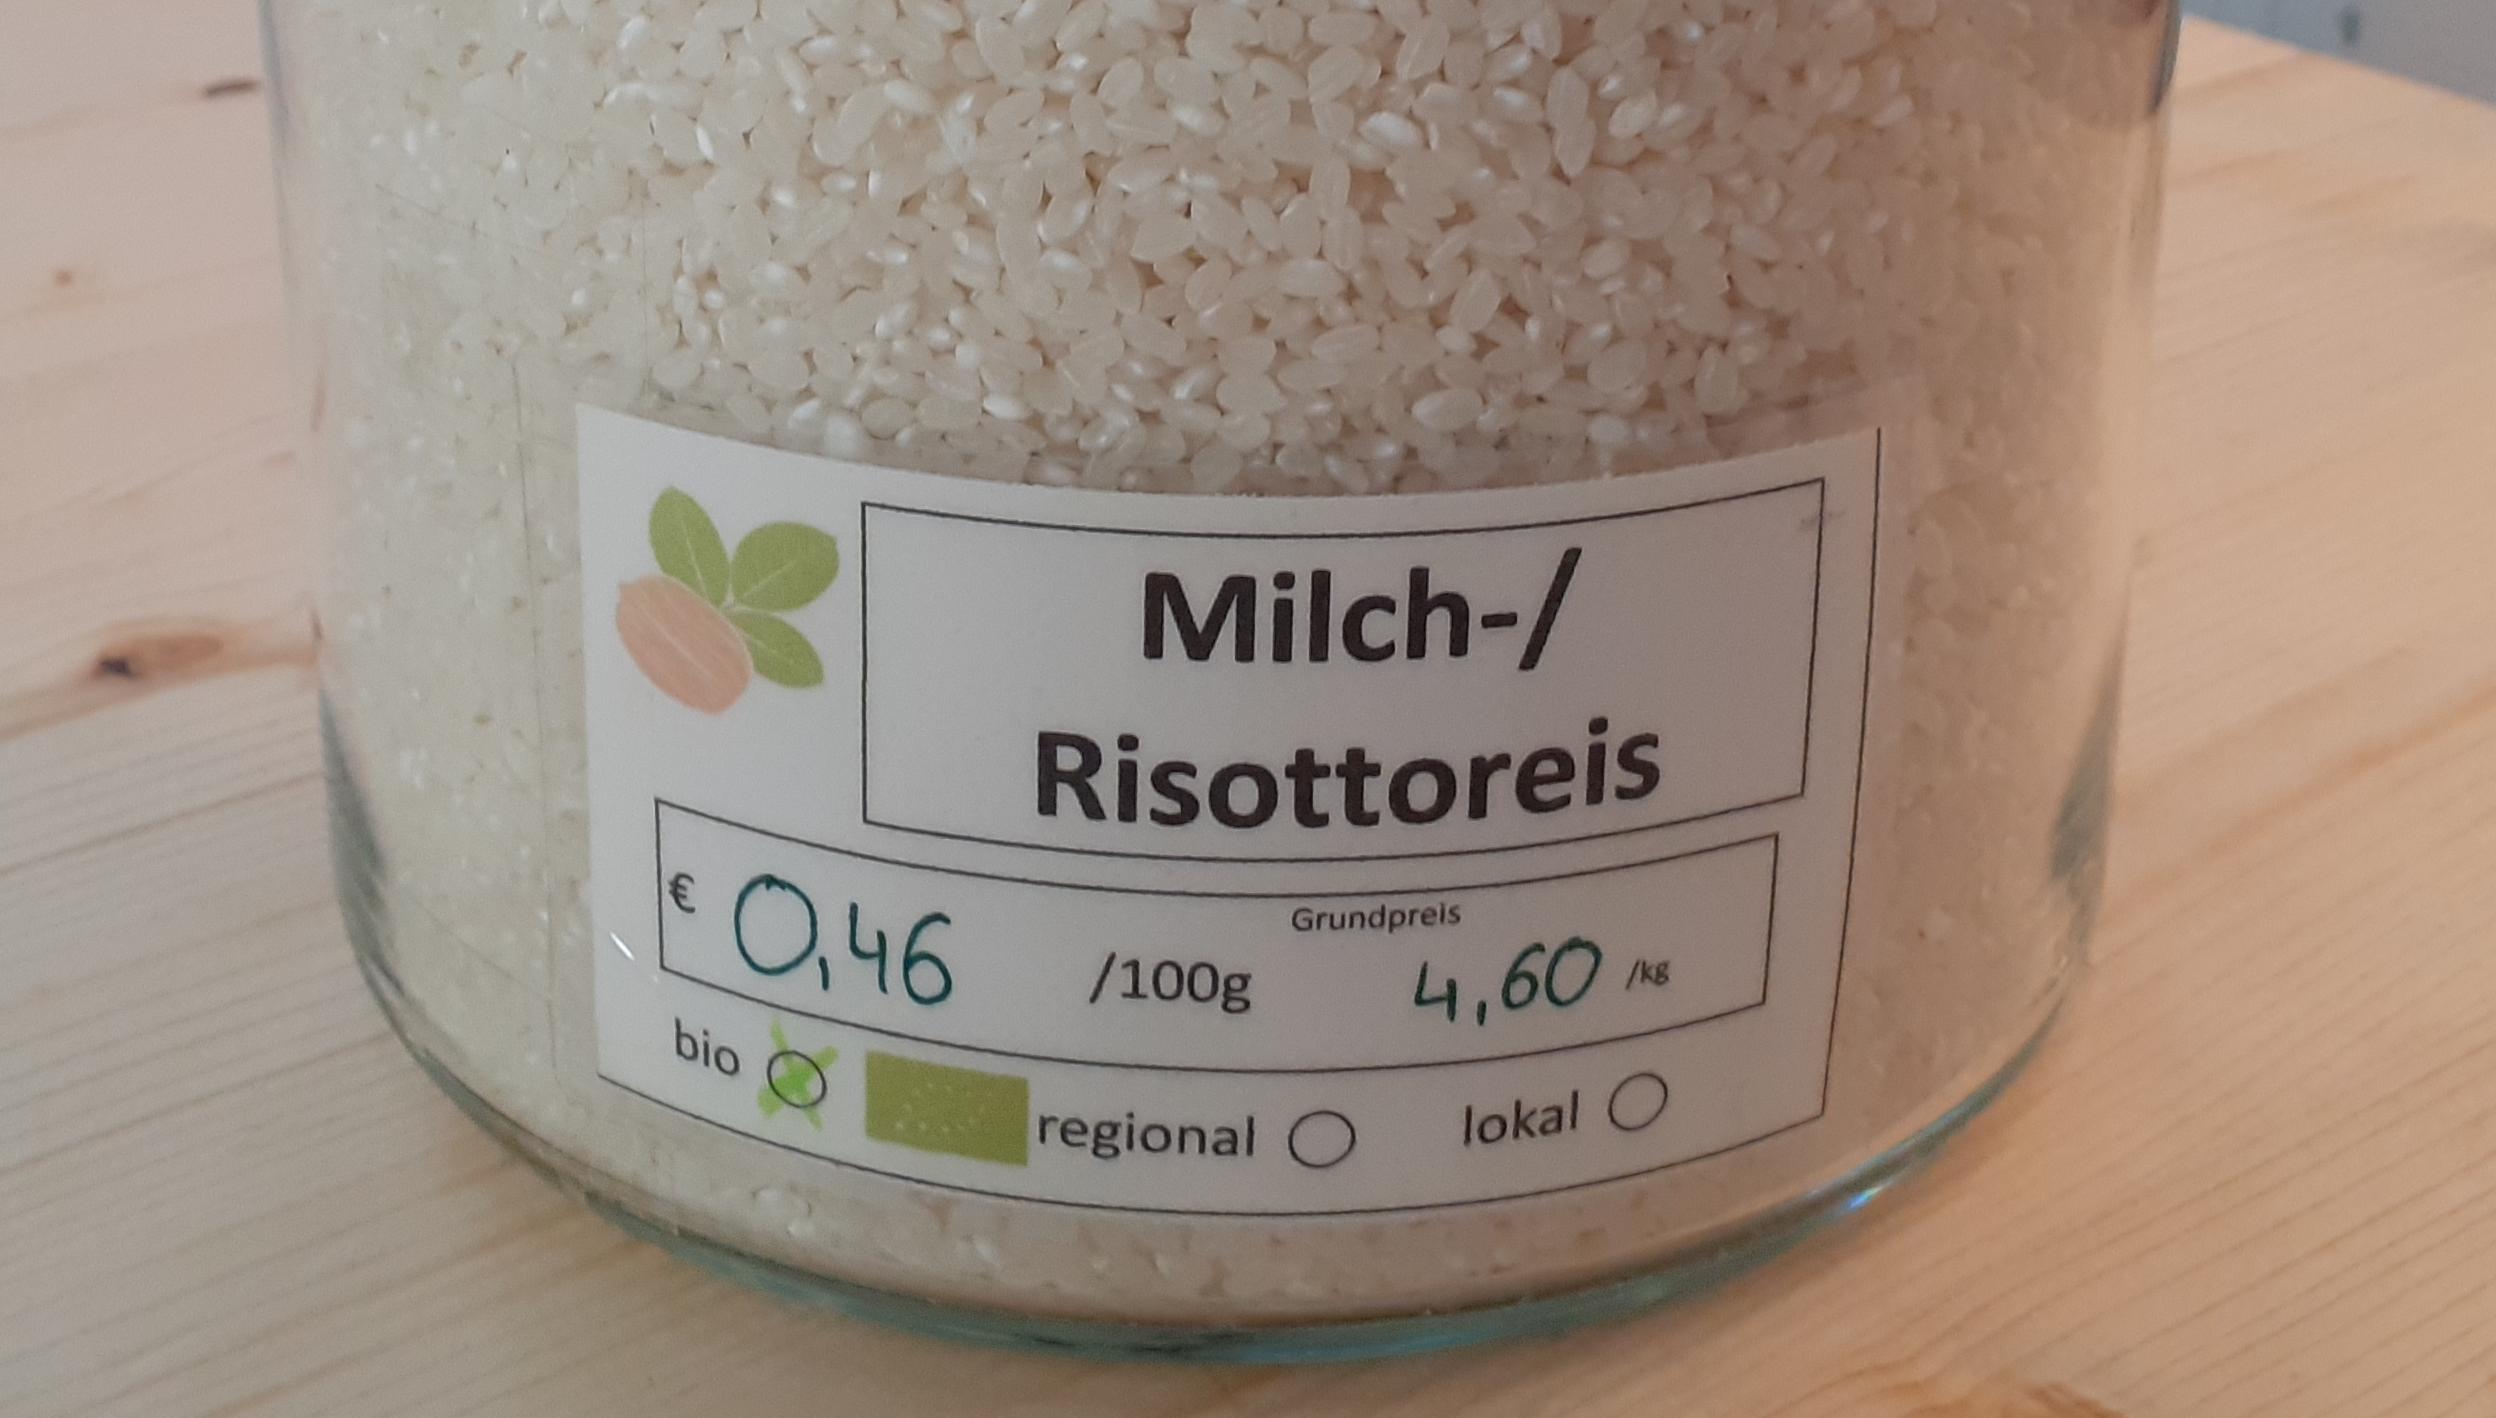 Milch- / Risottoreis